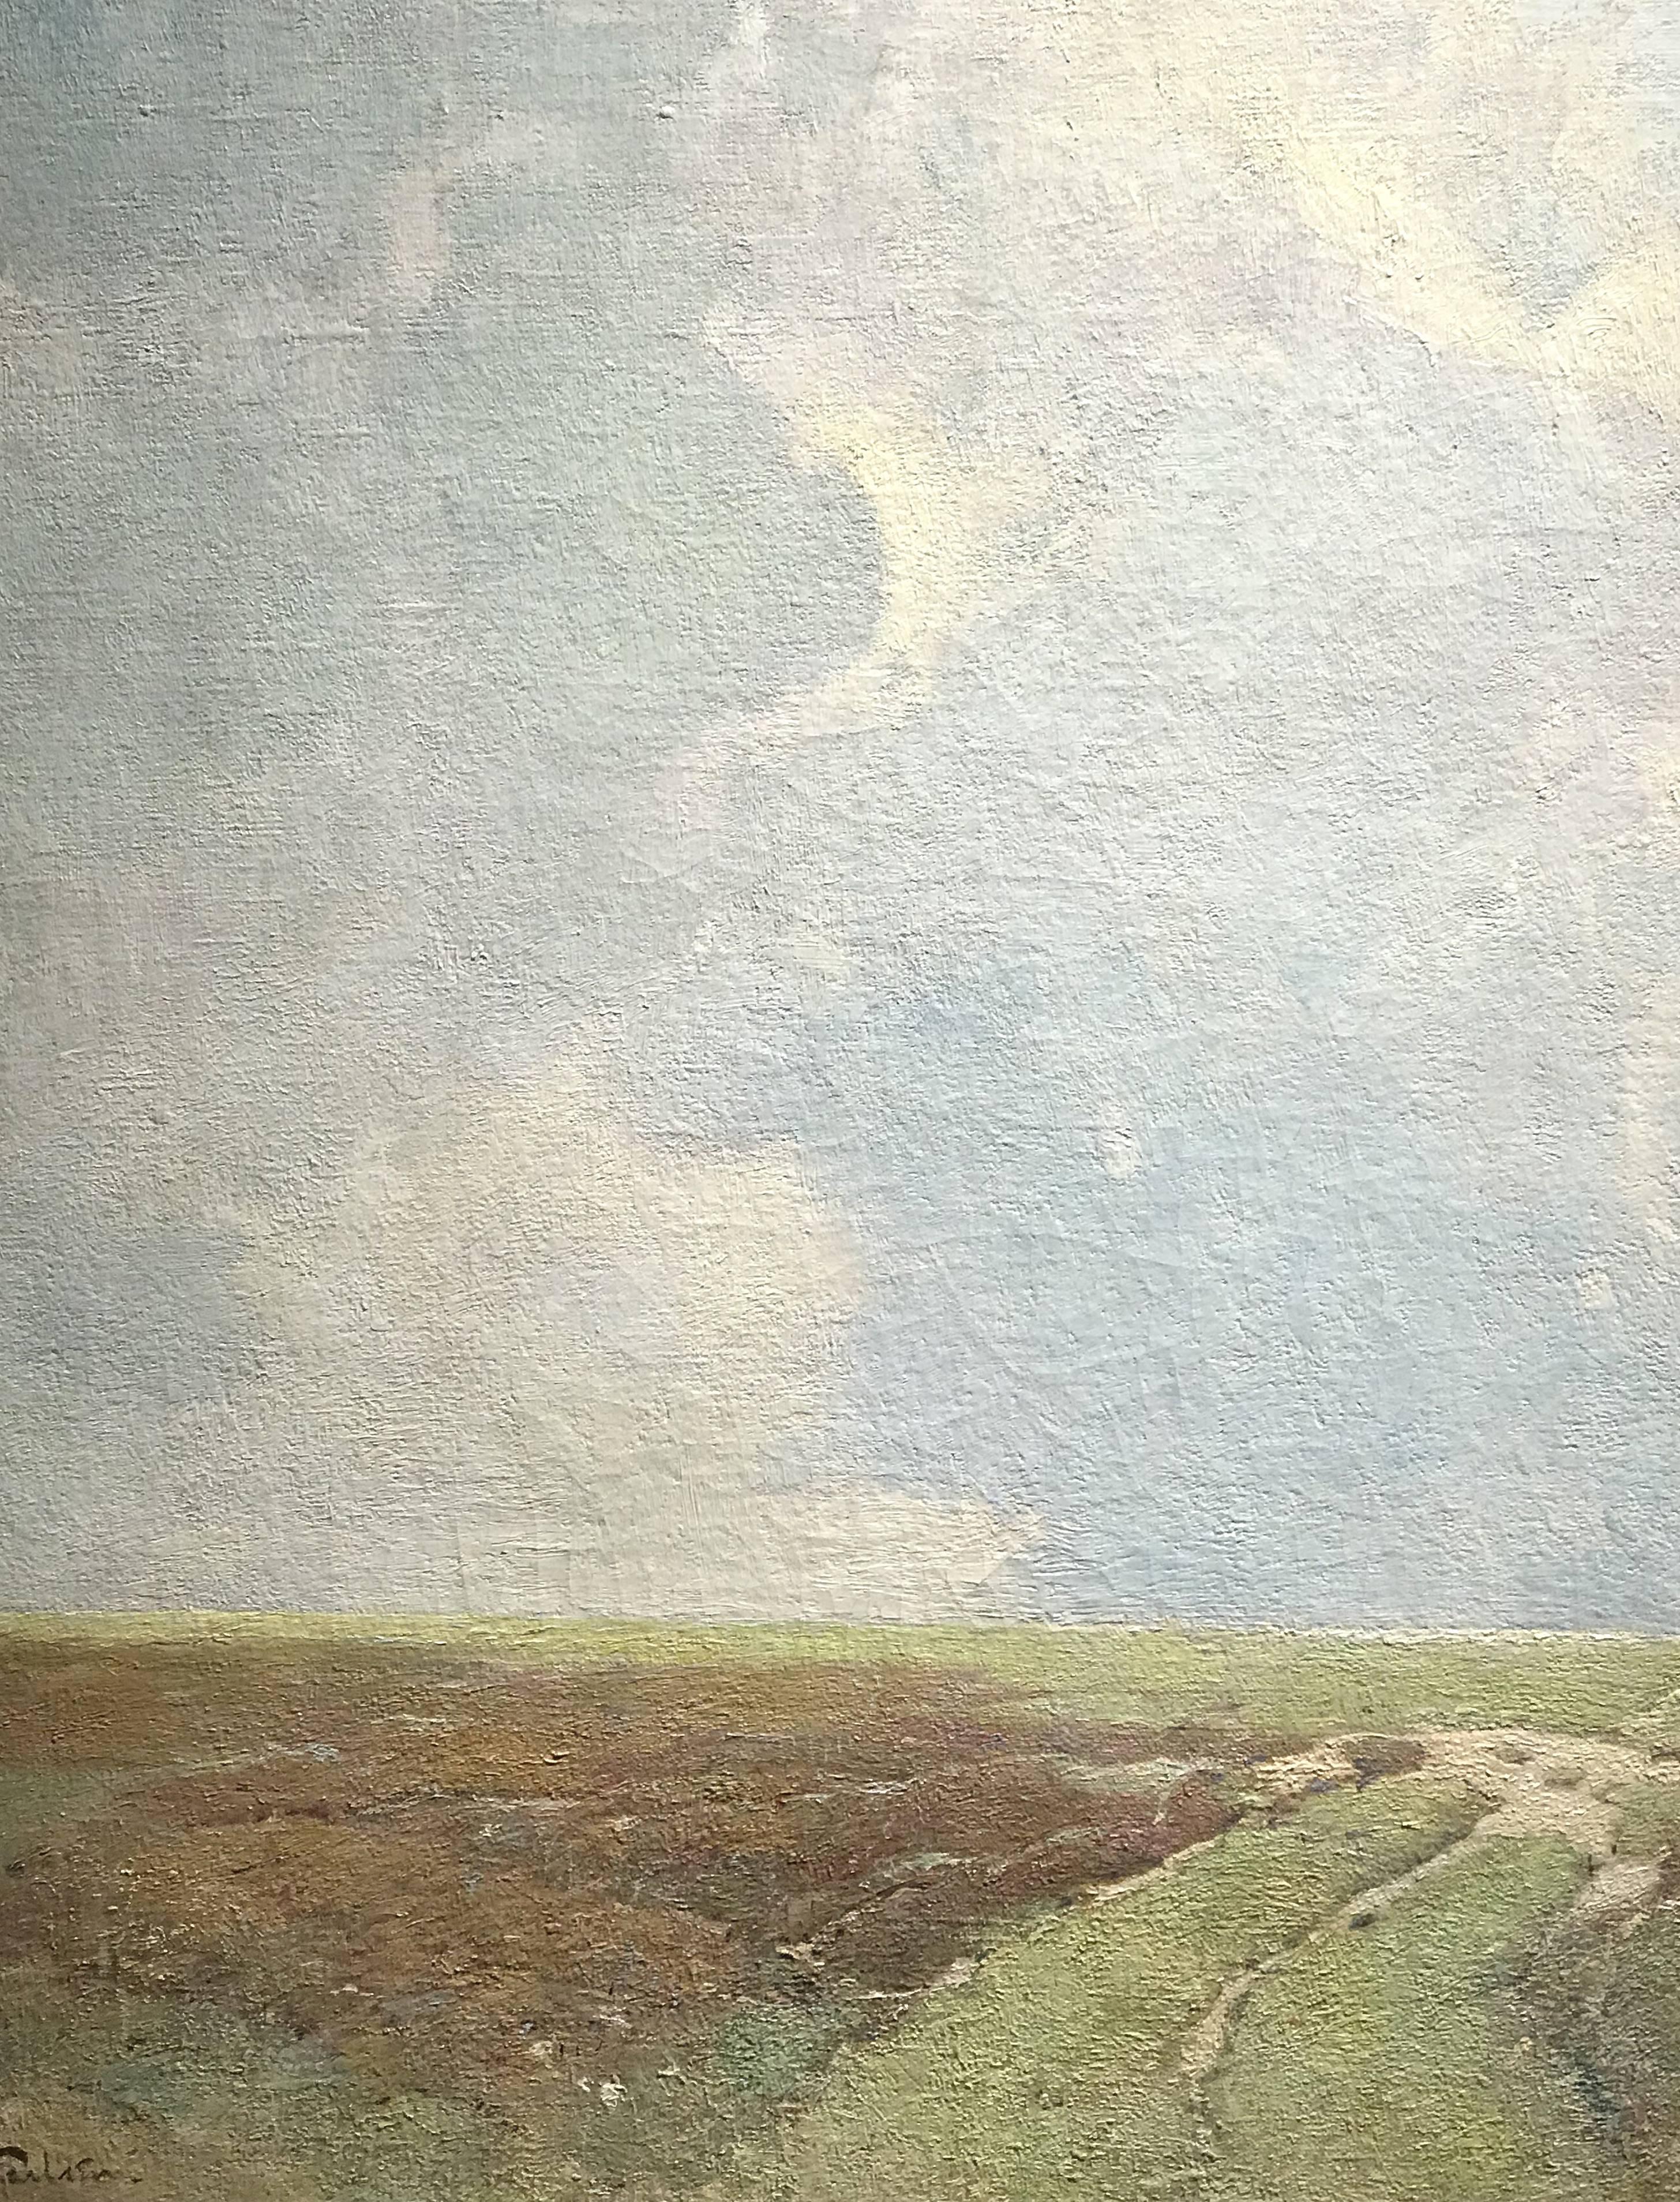 Danish Emil Soren Carlsen Marsh Landscape Oil Painting, Probably Long Island Sound